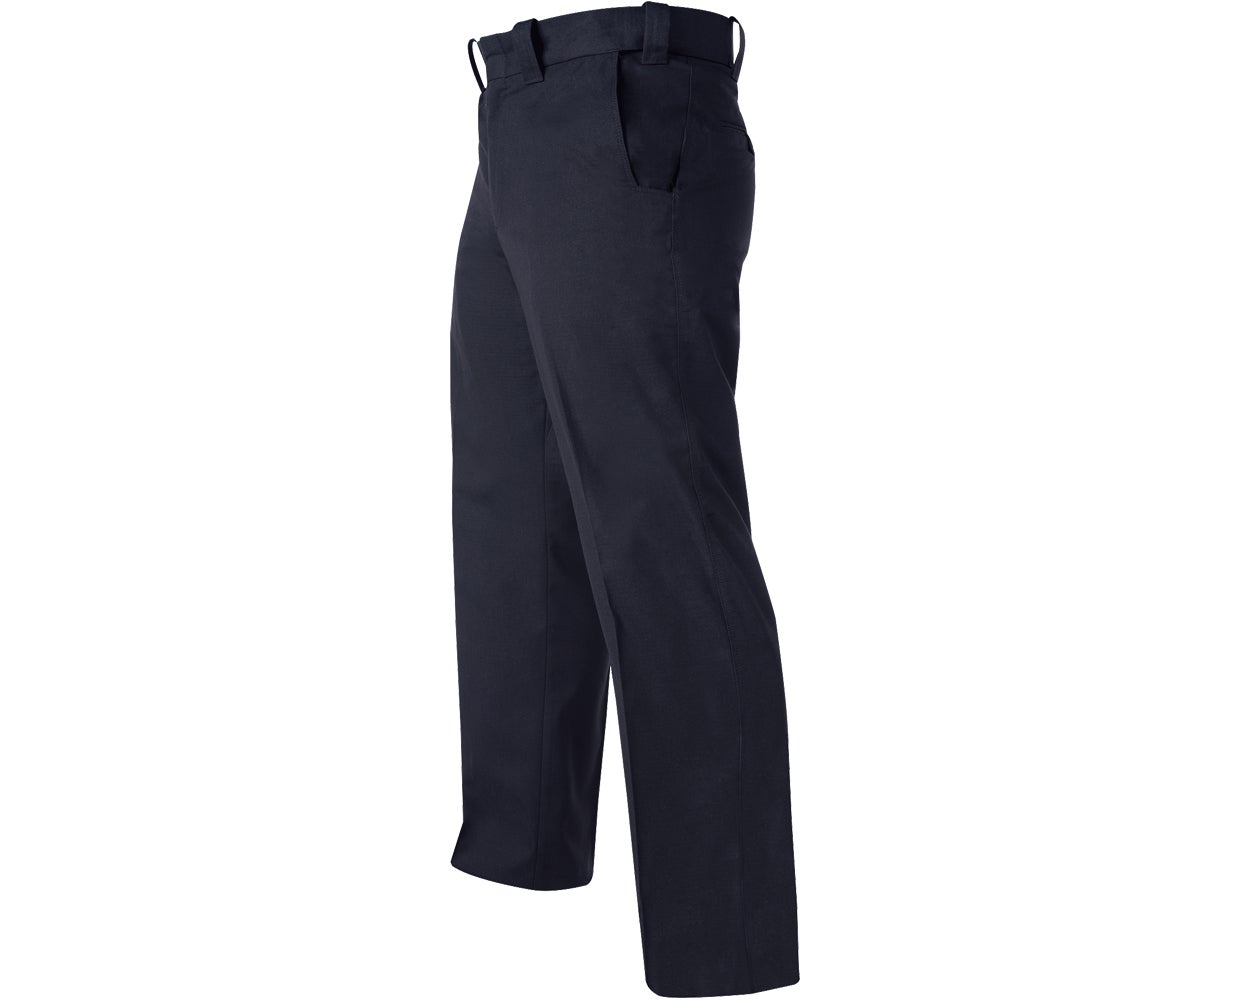 Flying Cross FX STAT Men's Class A Uniform Pants with 4 Pockets FX77200